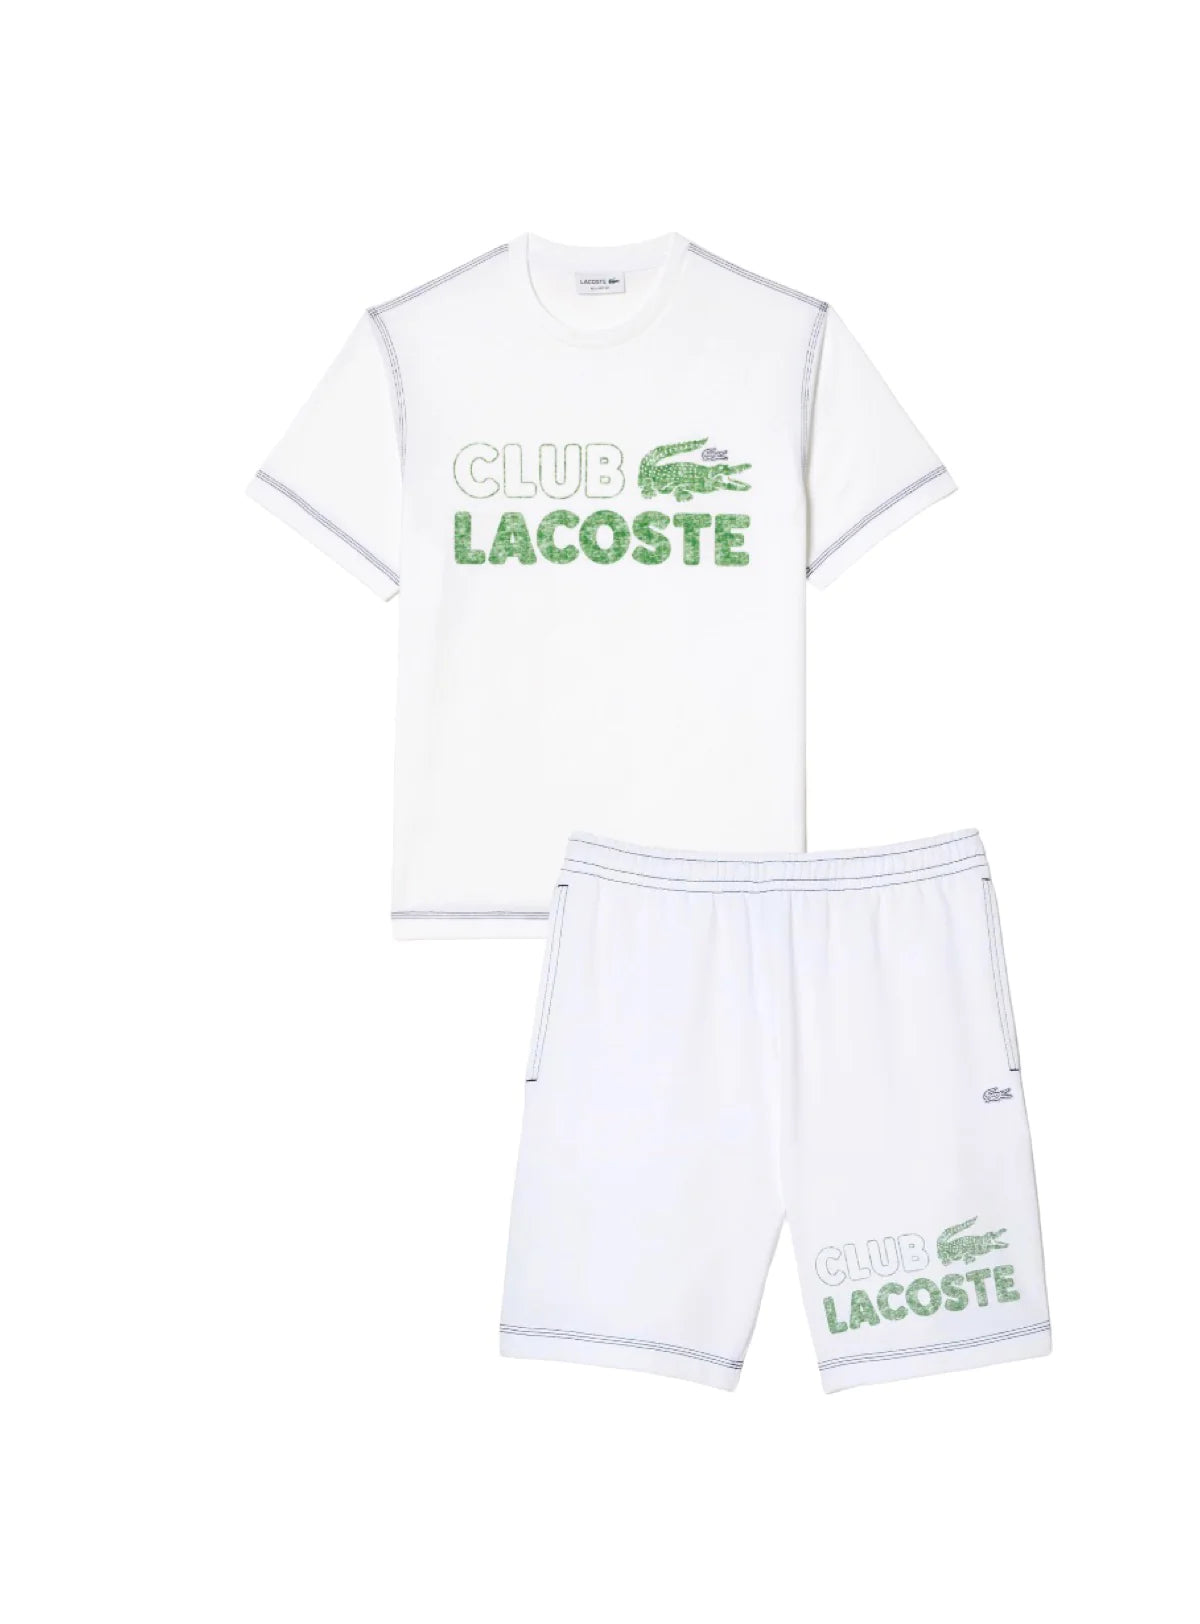 Lacoste - Vintage Print Organic Cotton Set - White